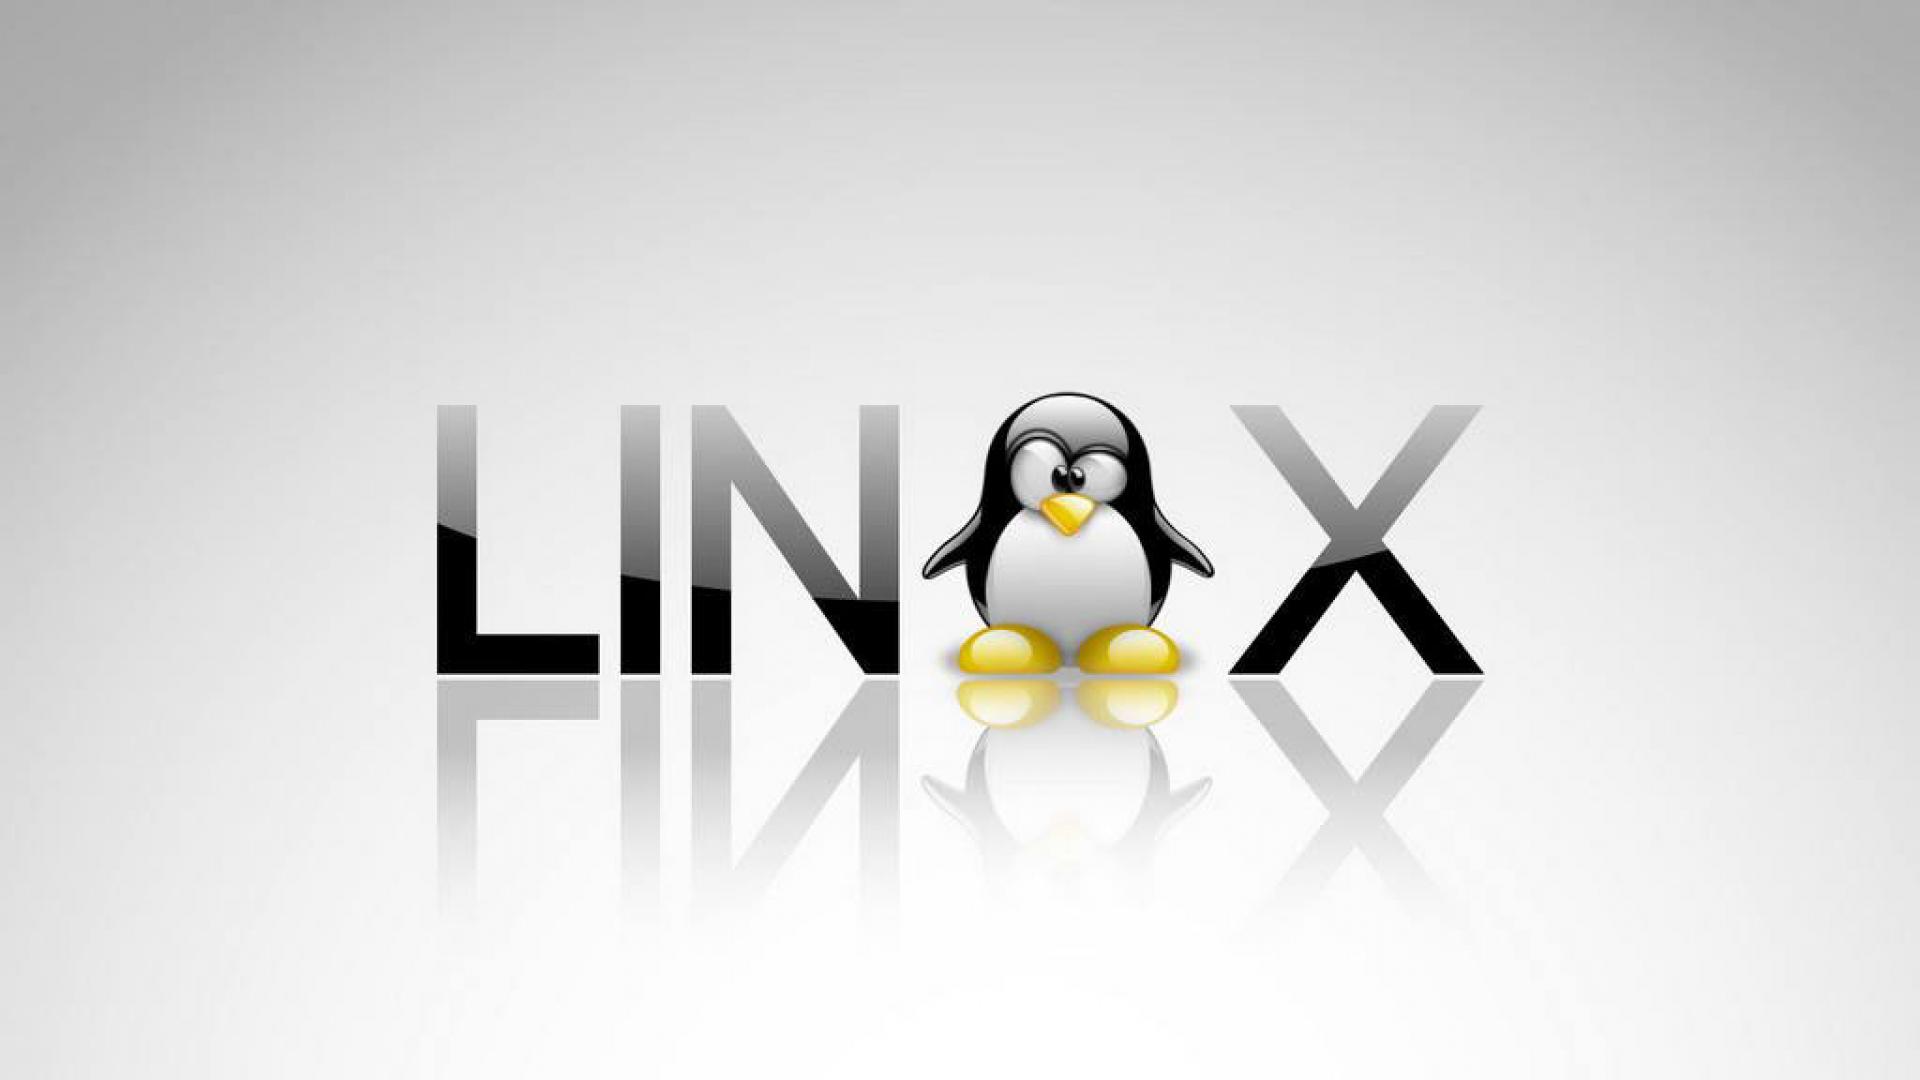 Linux文件系统的层次结构